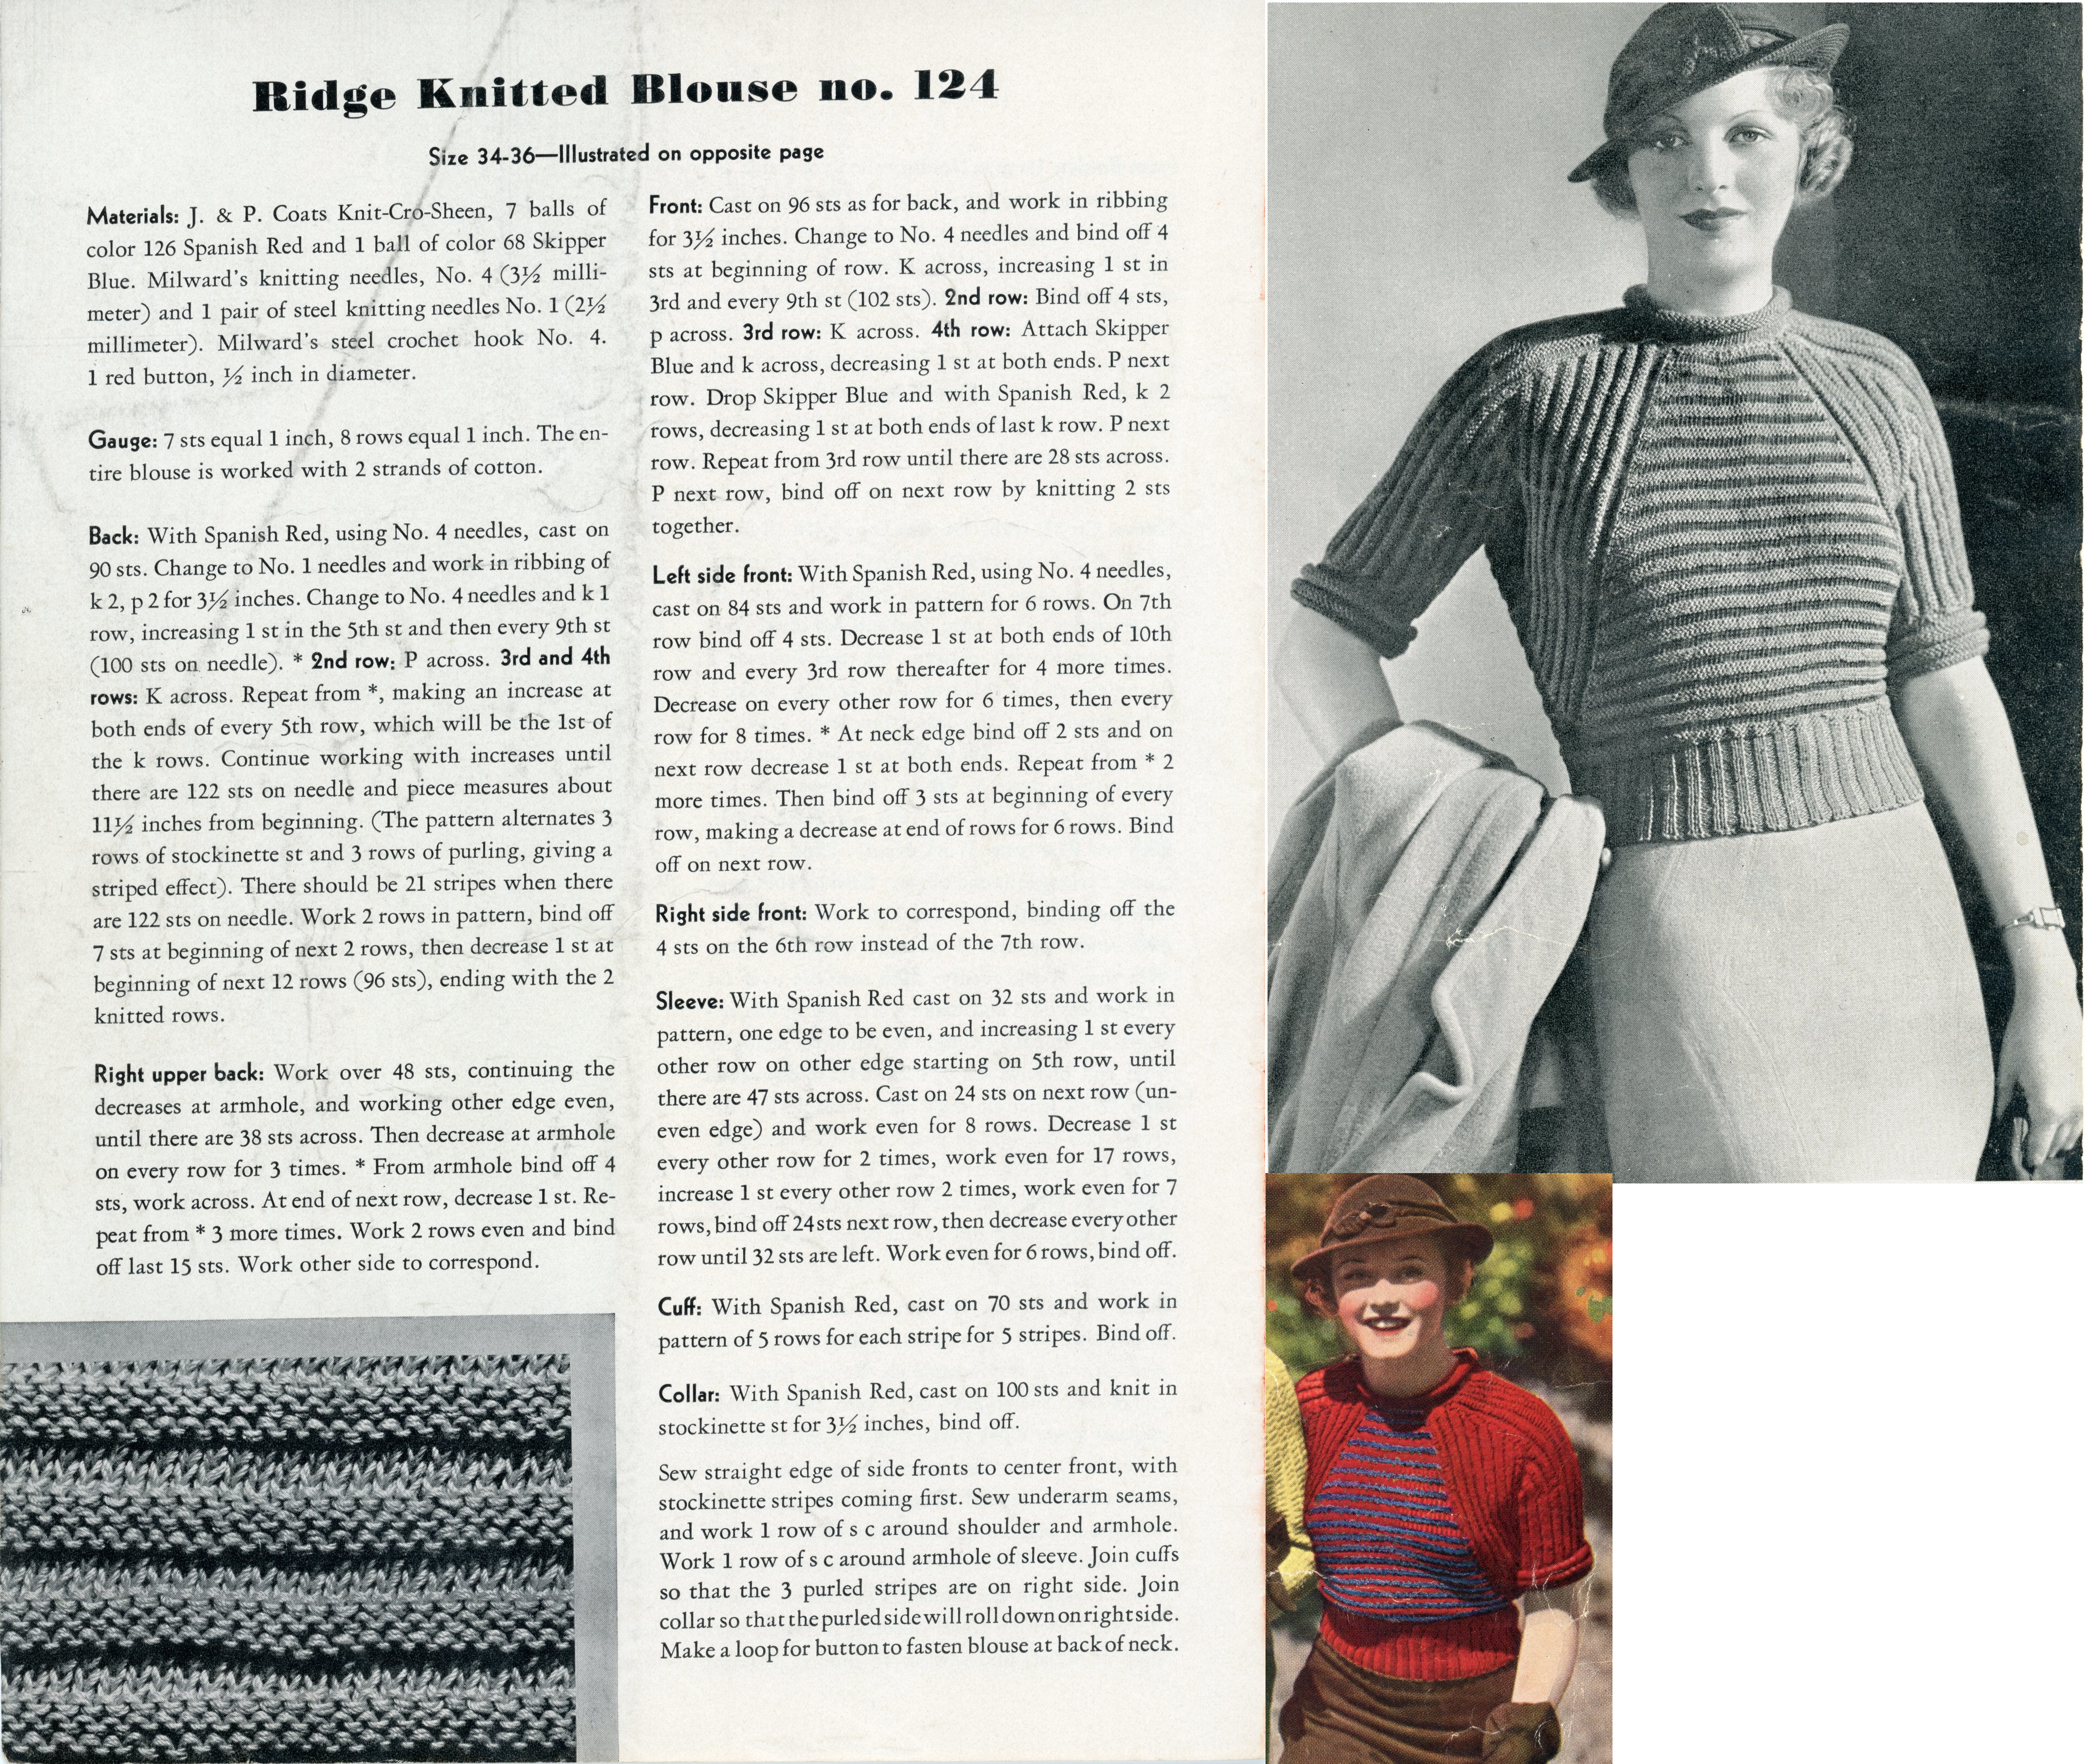 Ridge Knitted Blouse